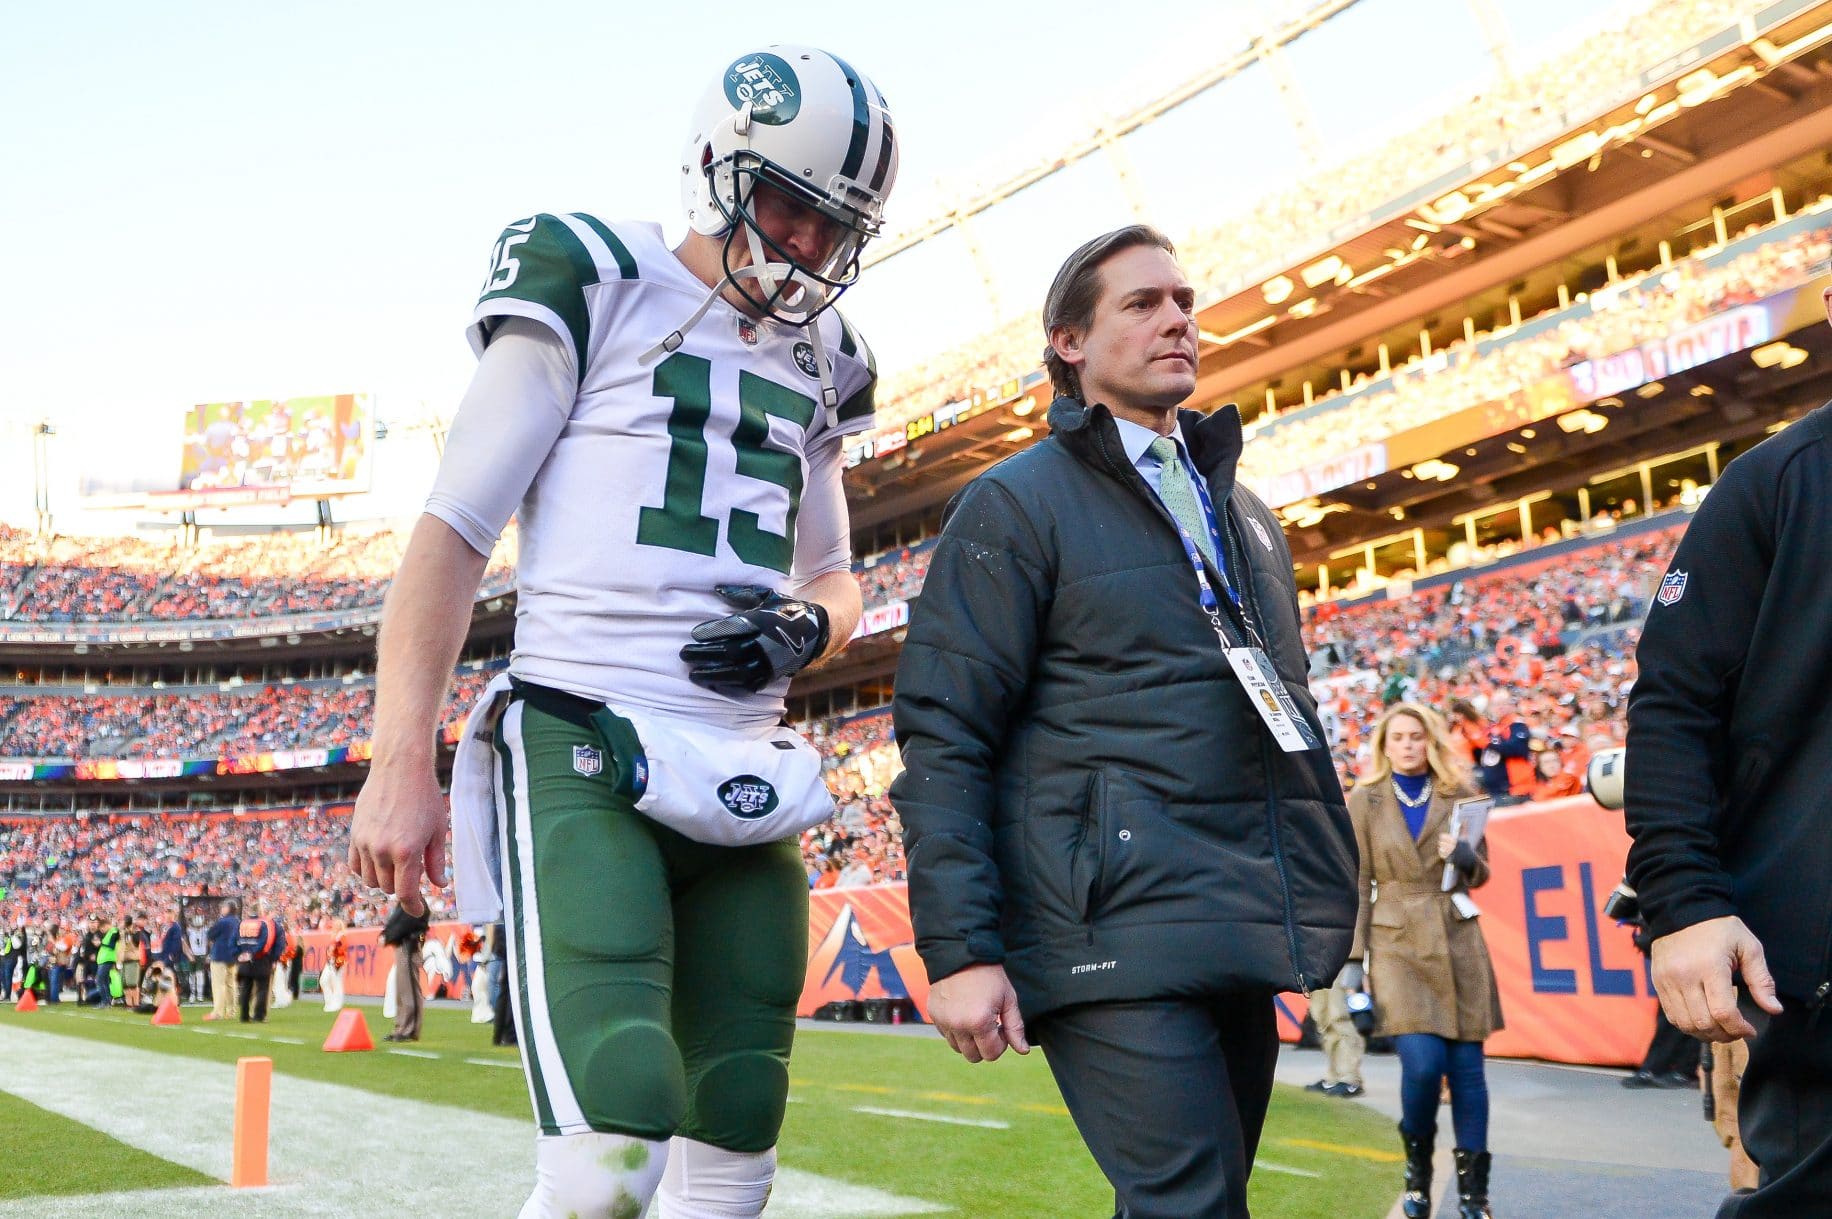 New York Jets: Josh McCown breaks hand in loss (Report)